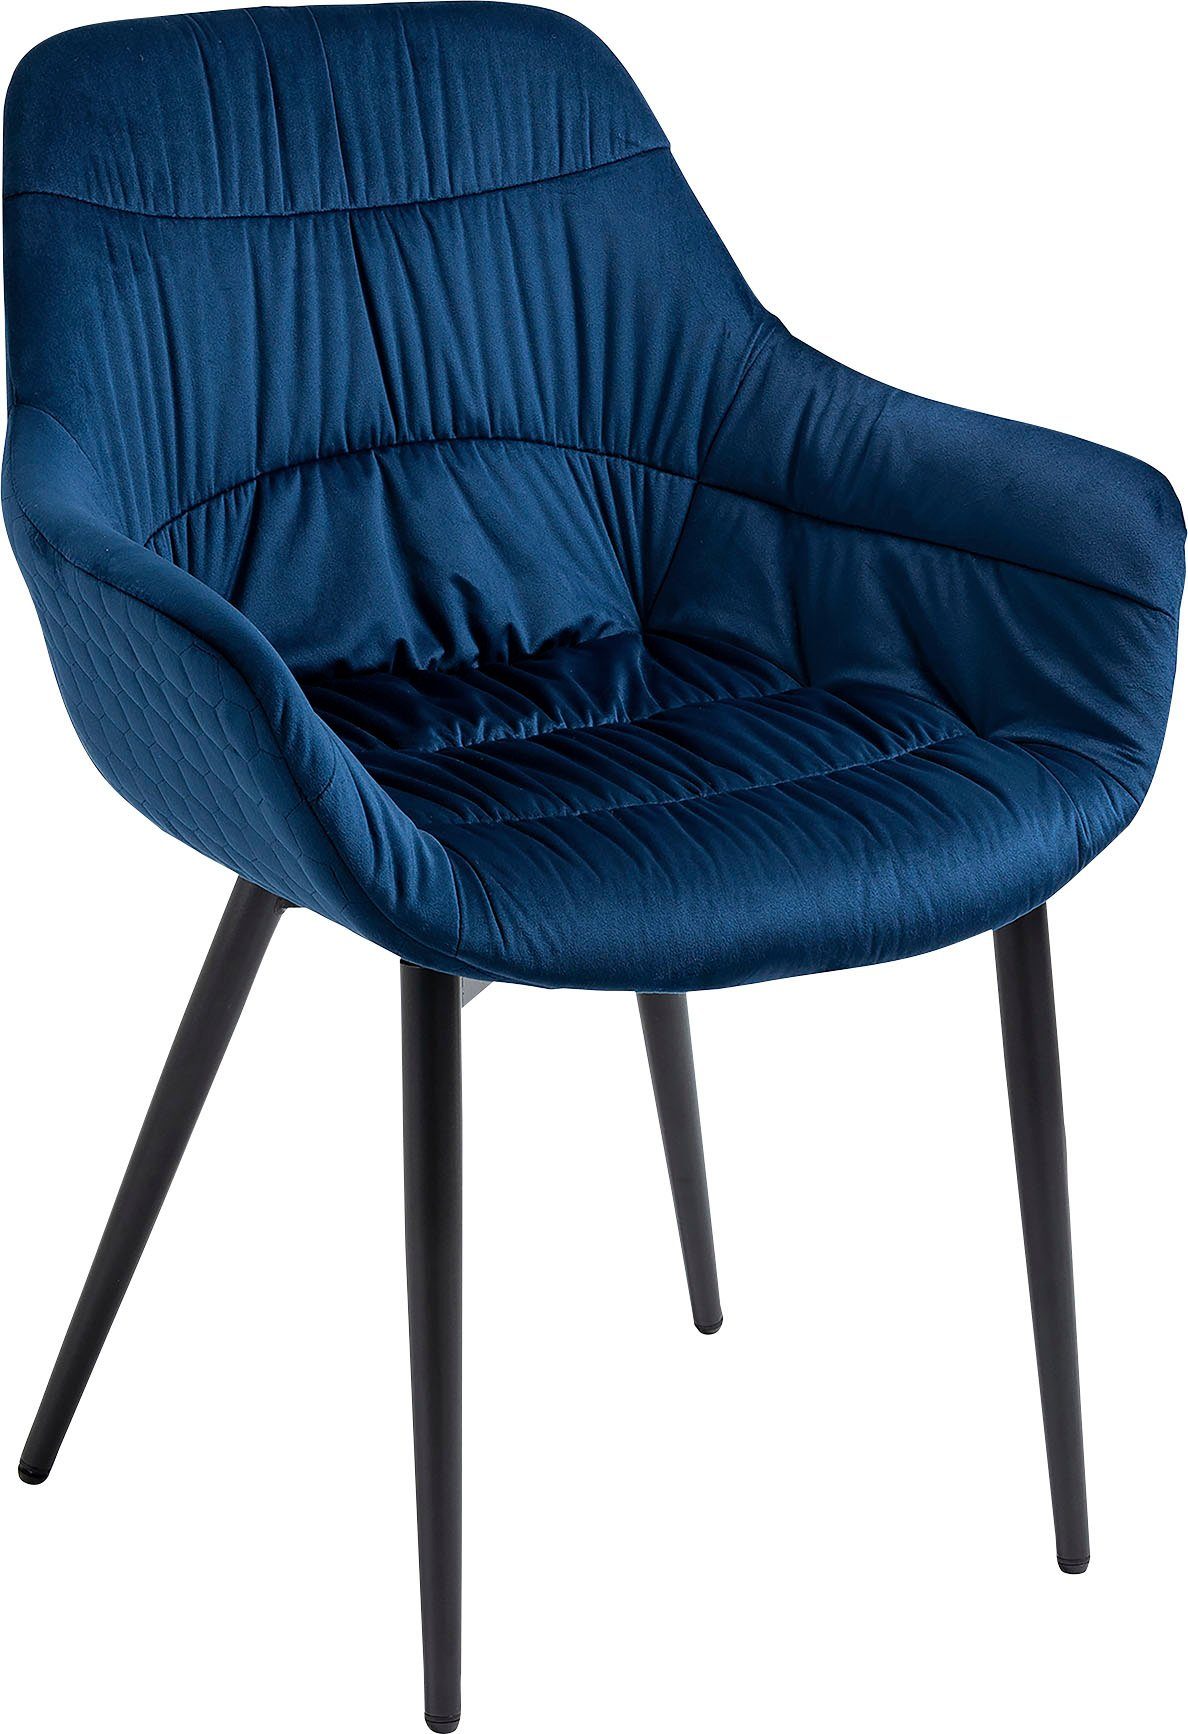 SalesFever Armlehnstuhl, 2-fach gesteppt Blau/Schwarz